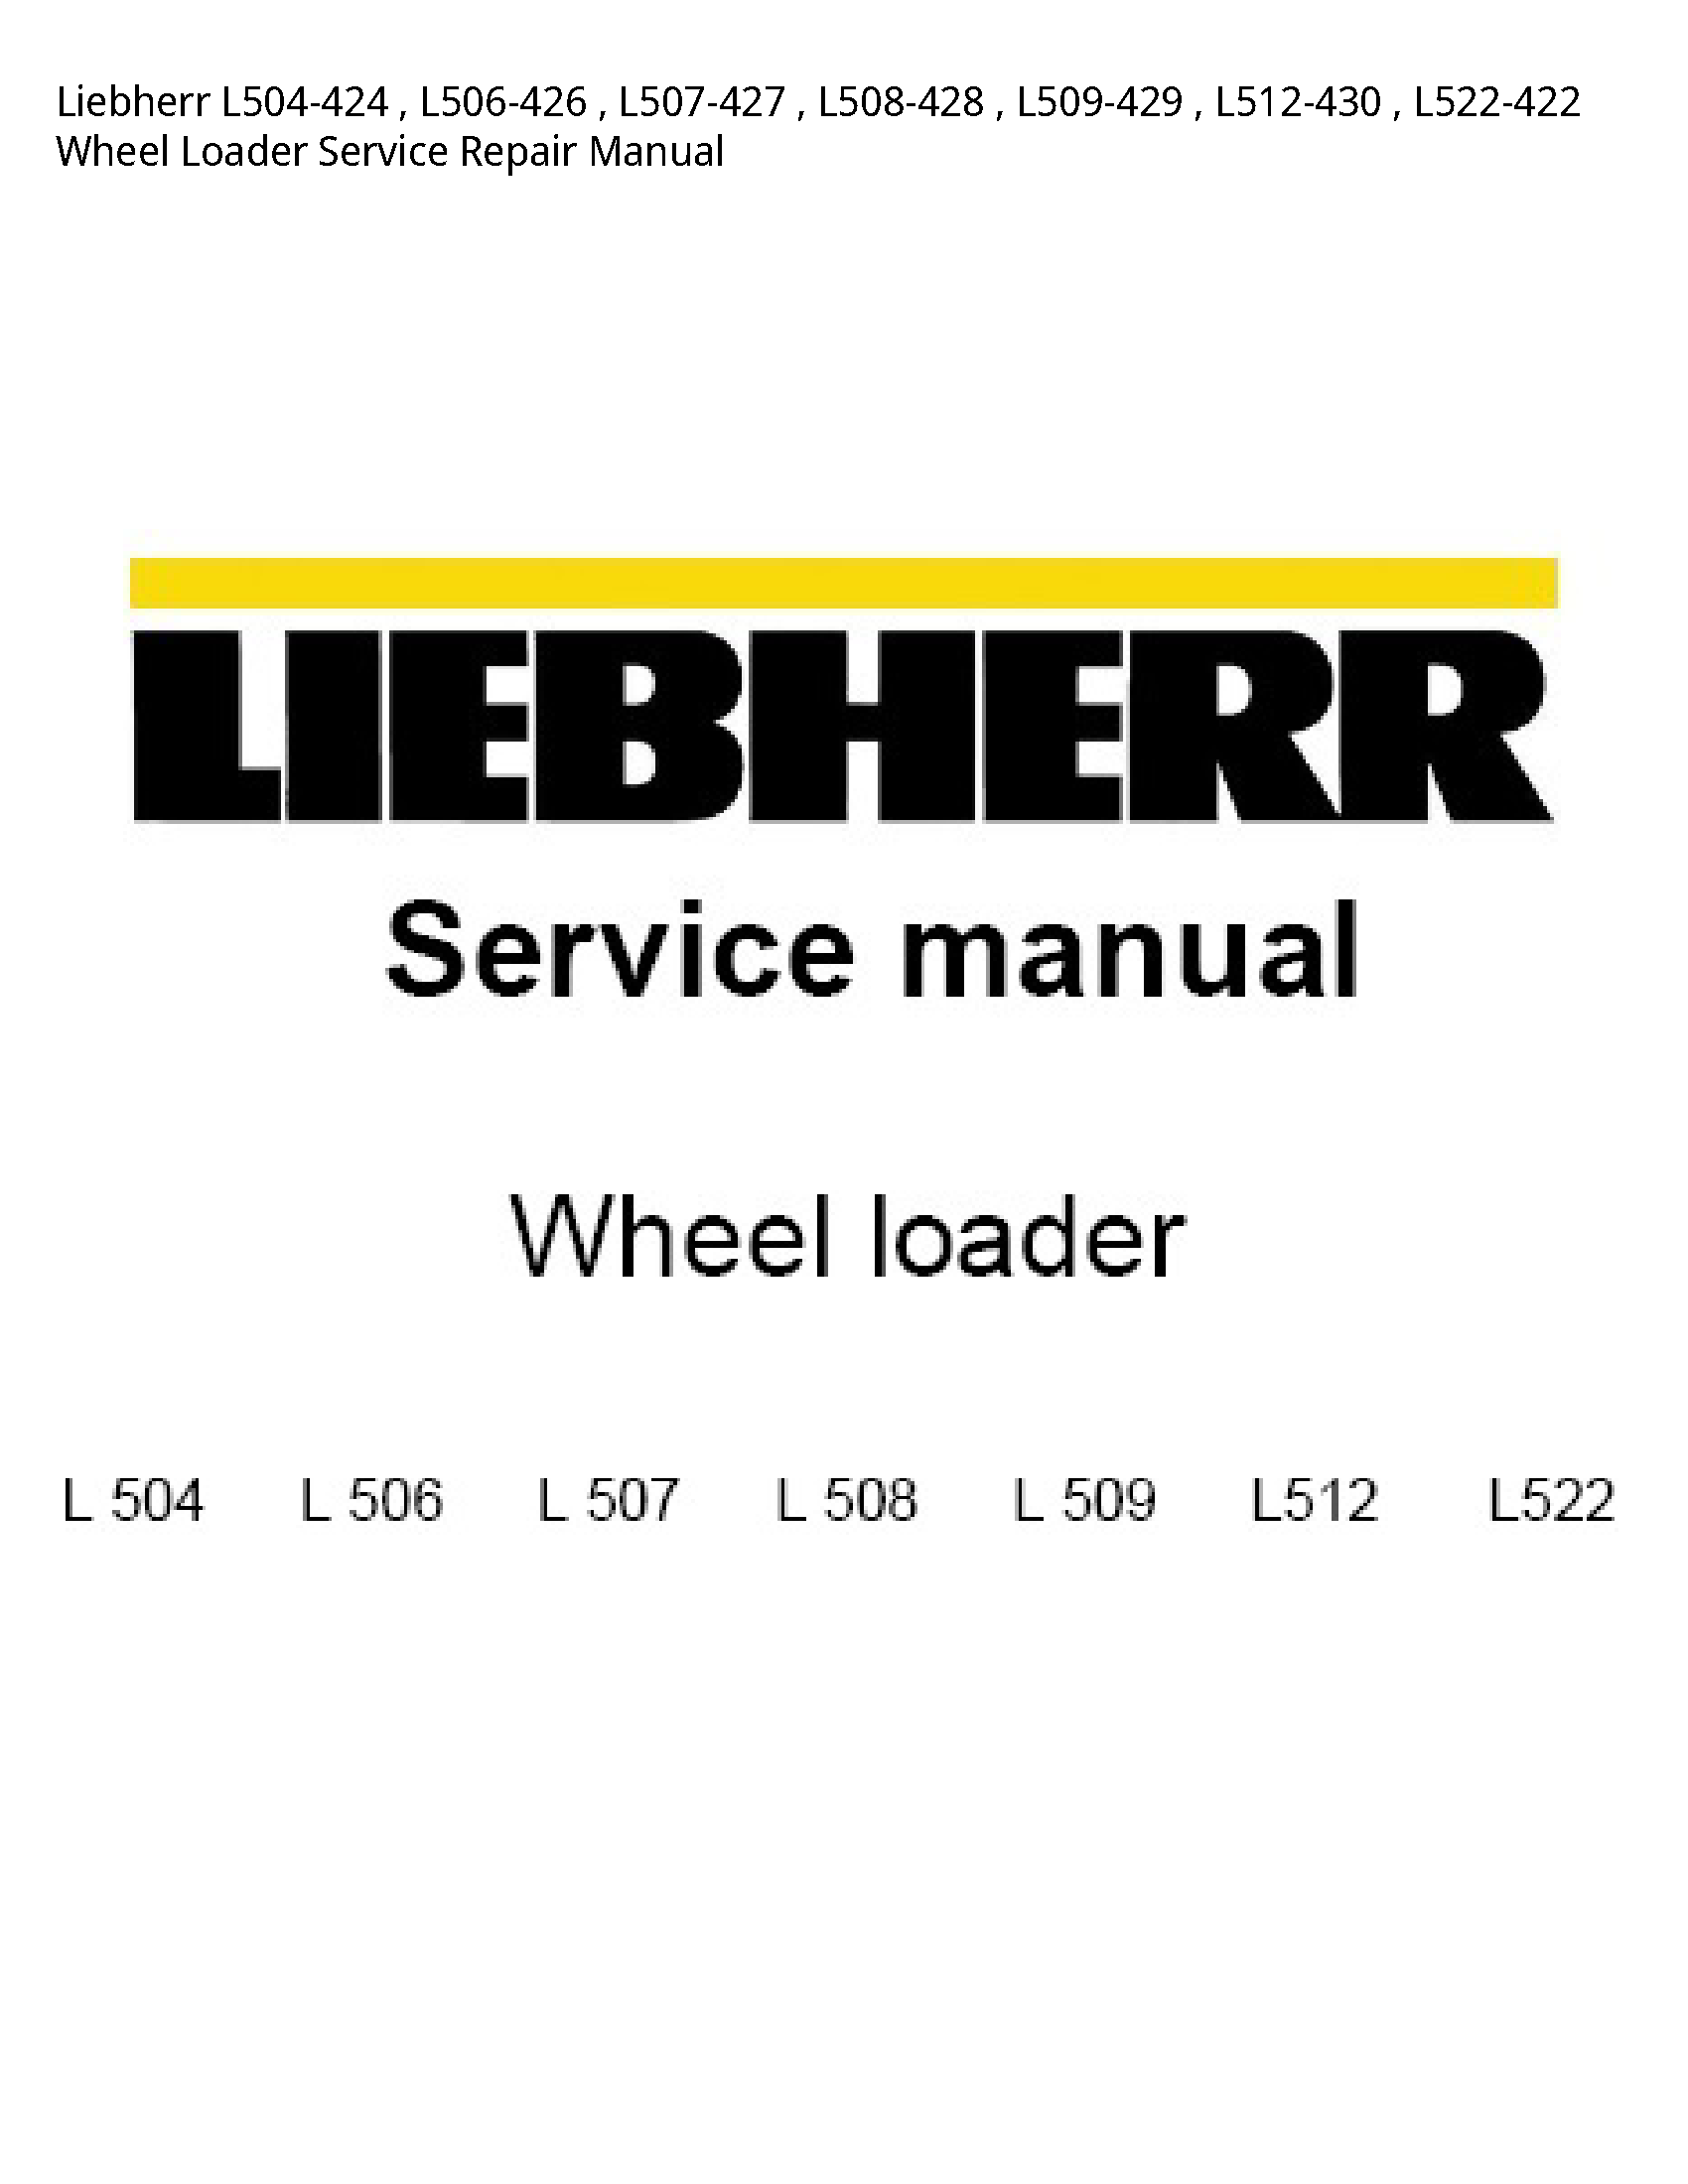 Liebherr L504-424 Wheel Loader manual